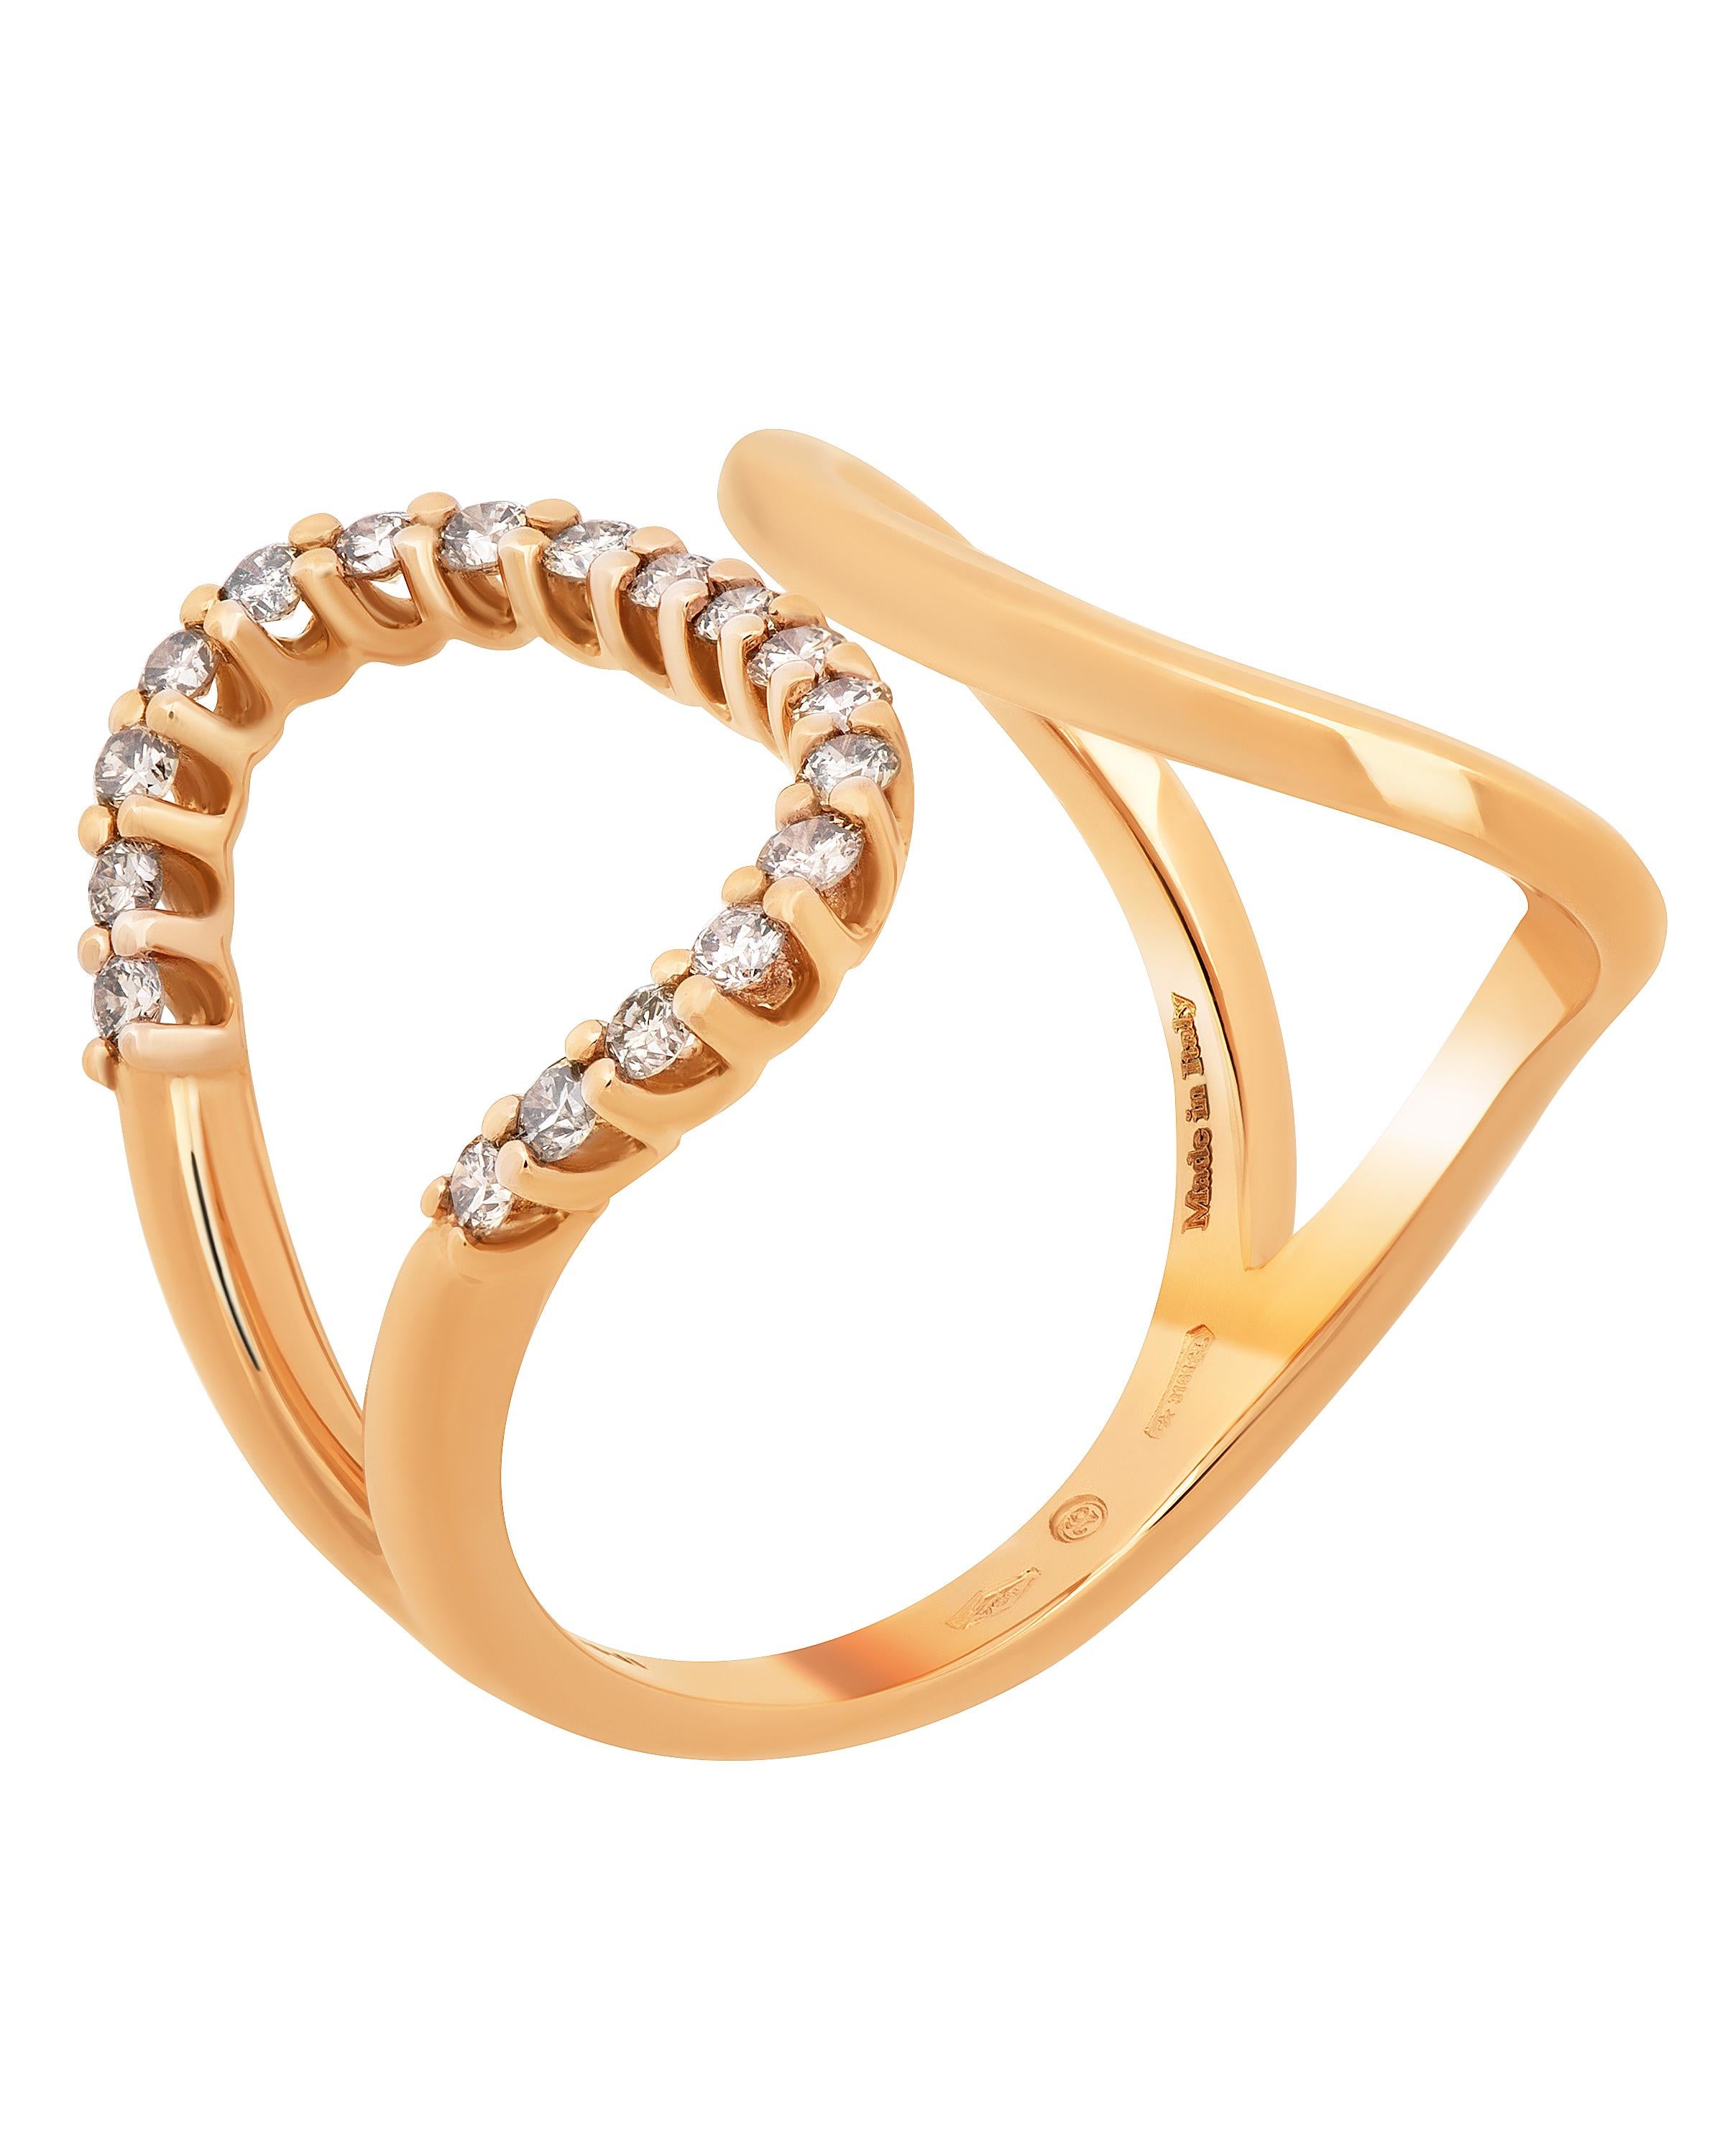 Contemporary SALVINI 18K Rose Gold, Diamond Wrap Ring sz 6.75 For Sale